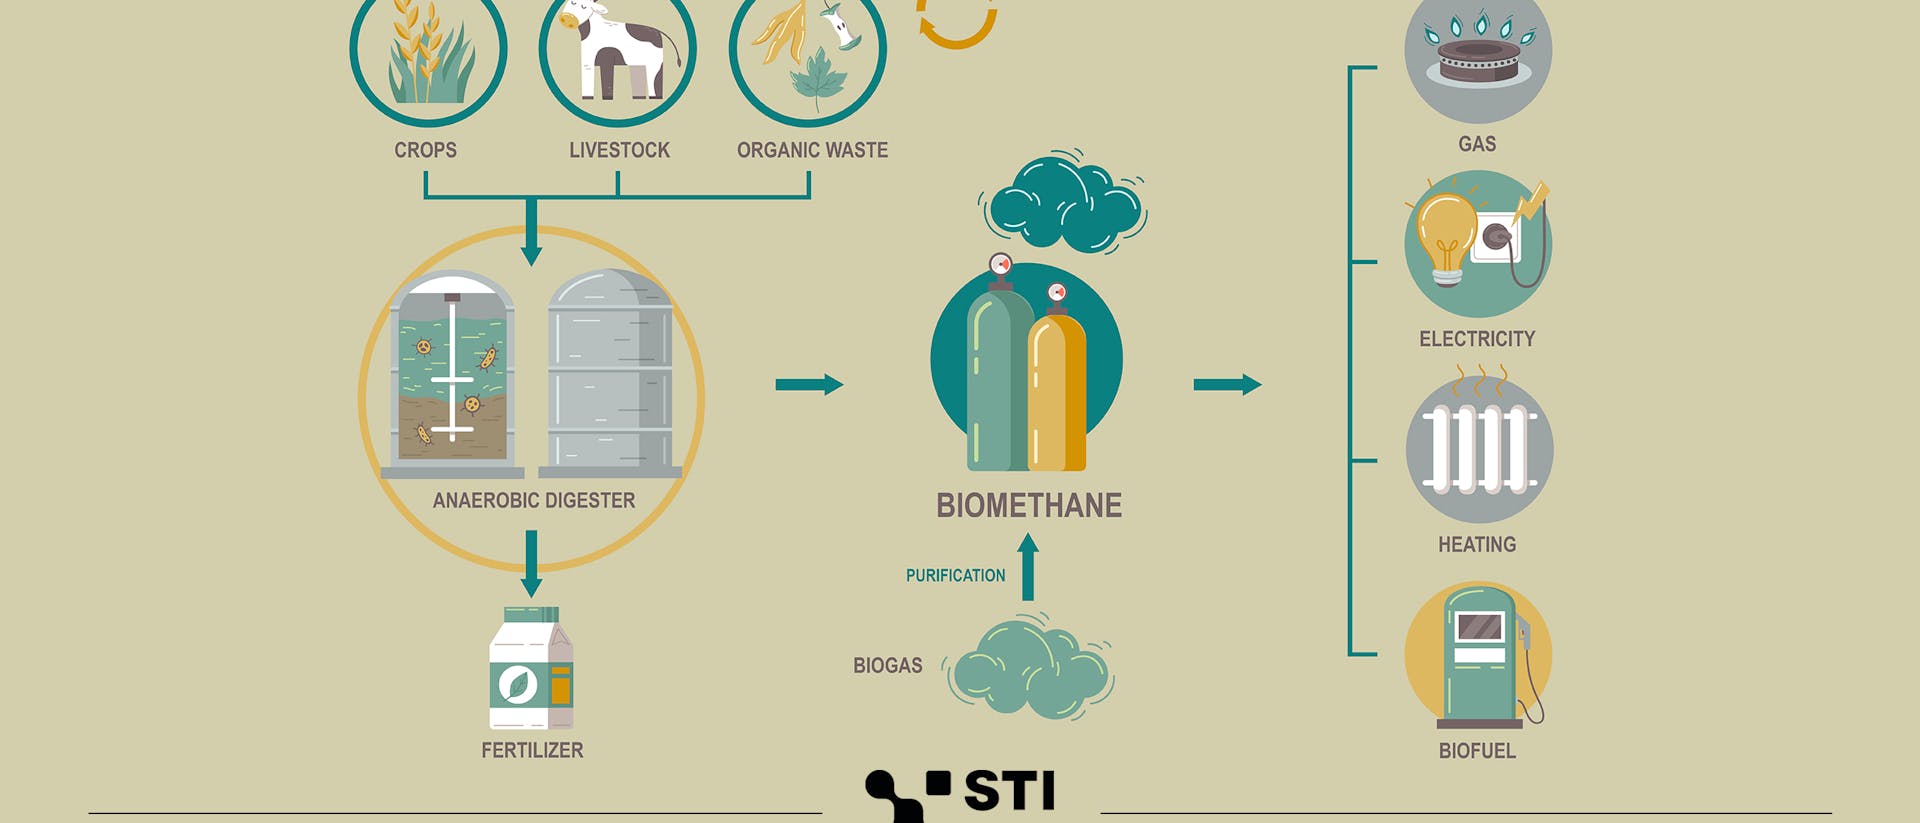 Biomethane production